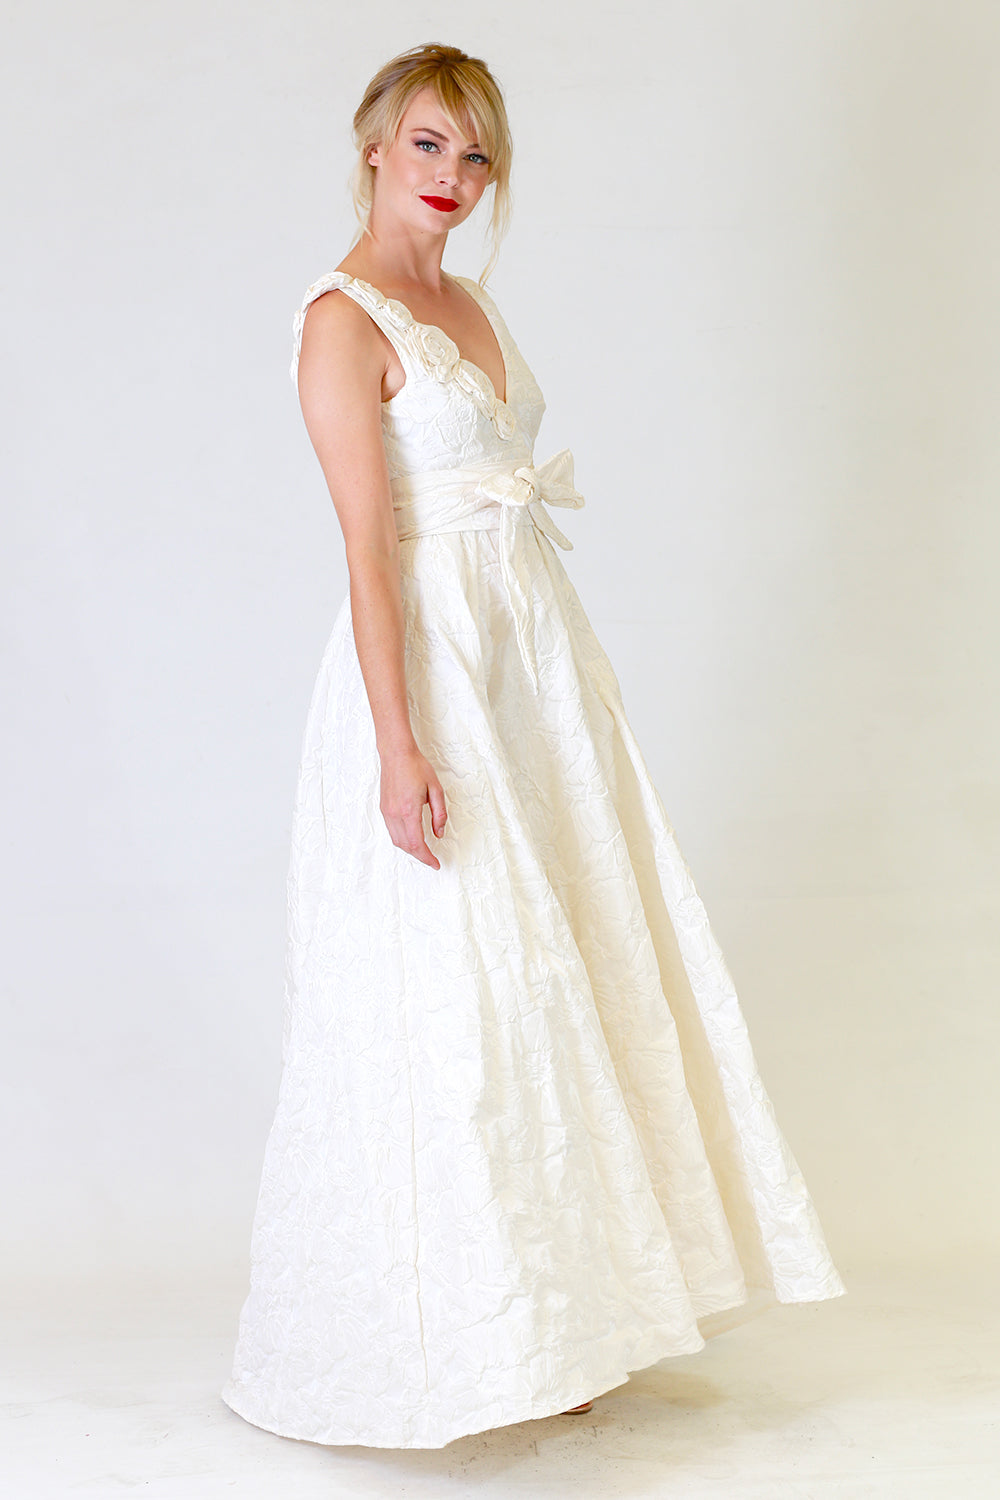 baby didion genevieve wedding dress in white